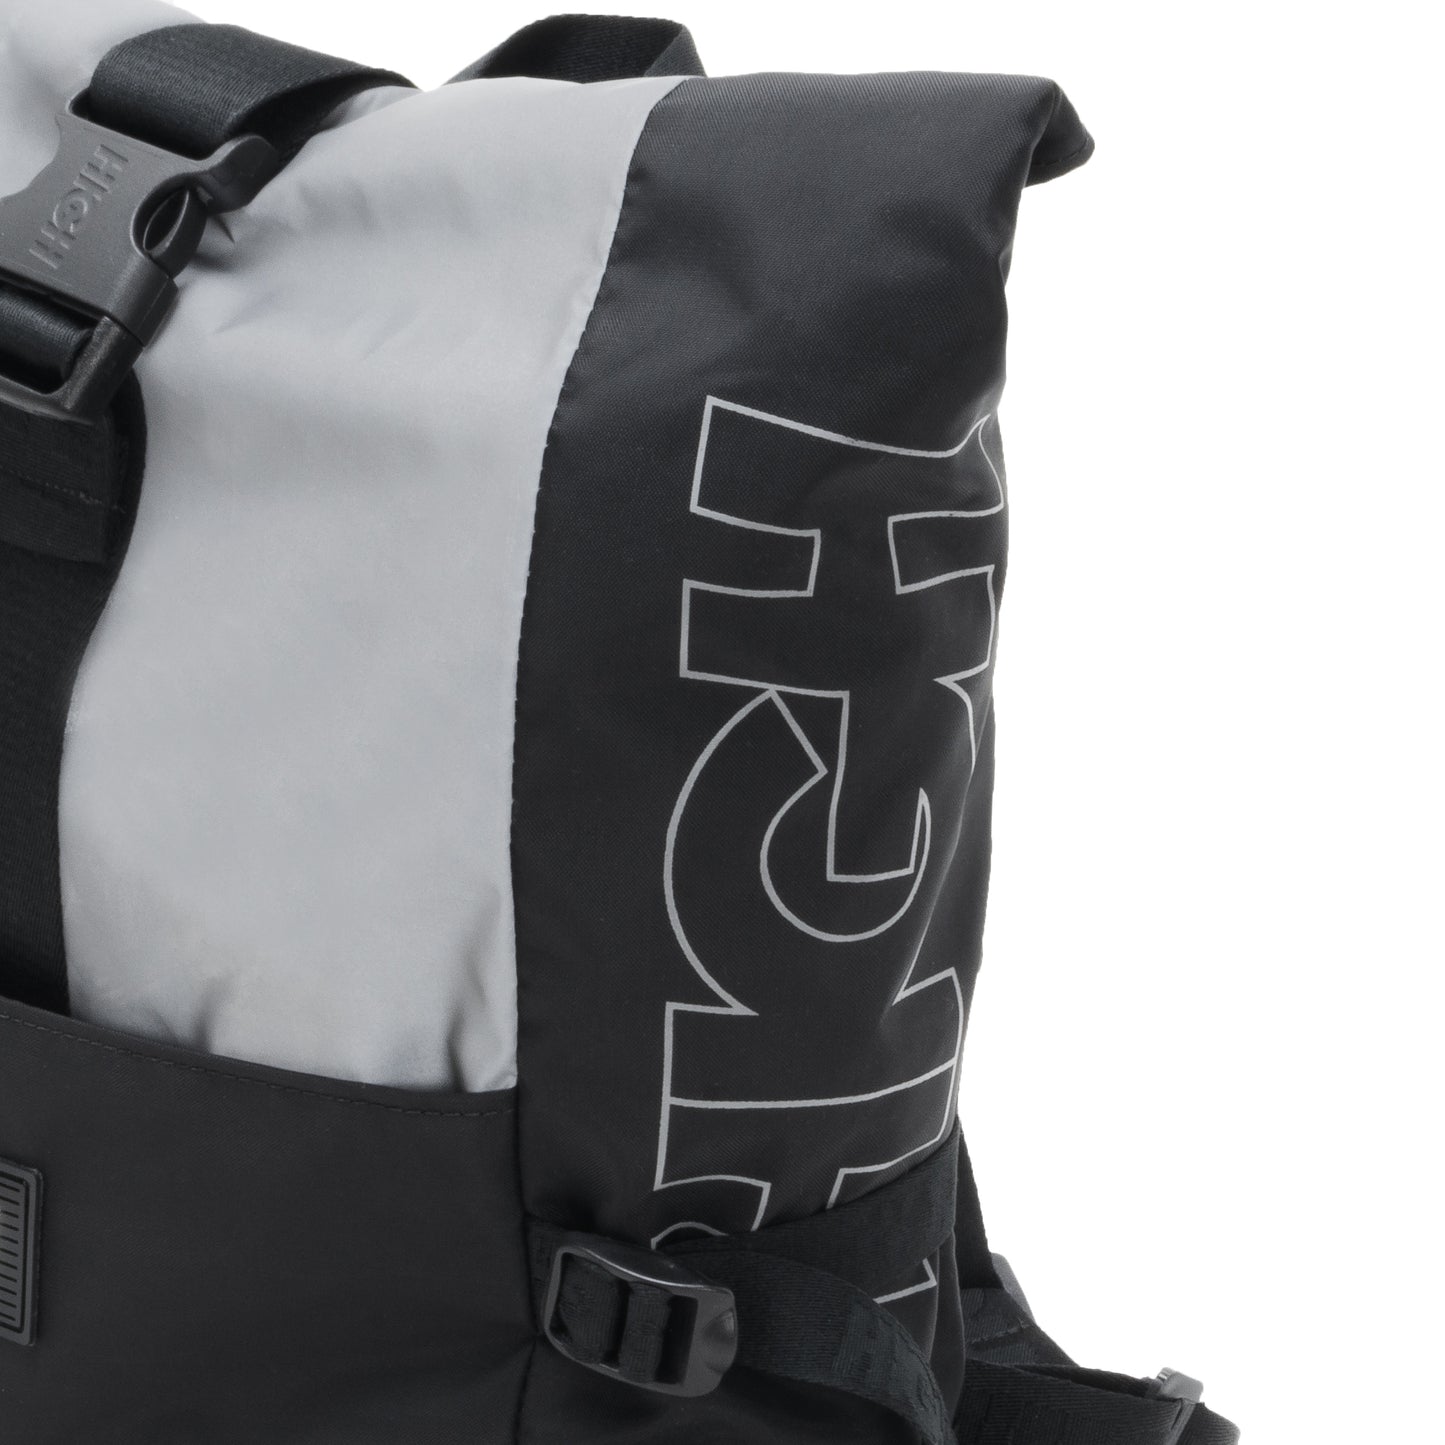 HIGH - Portable Backpack Reflective